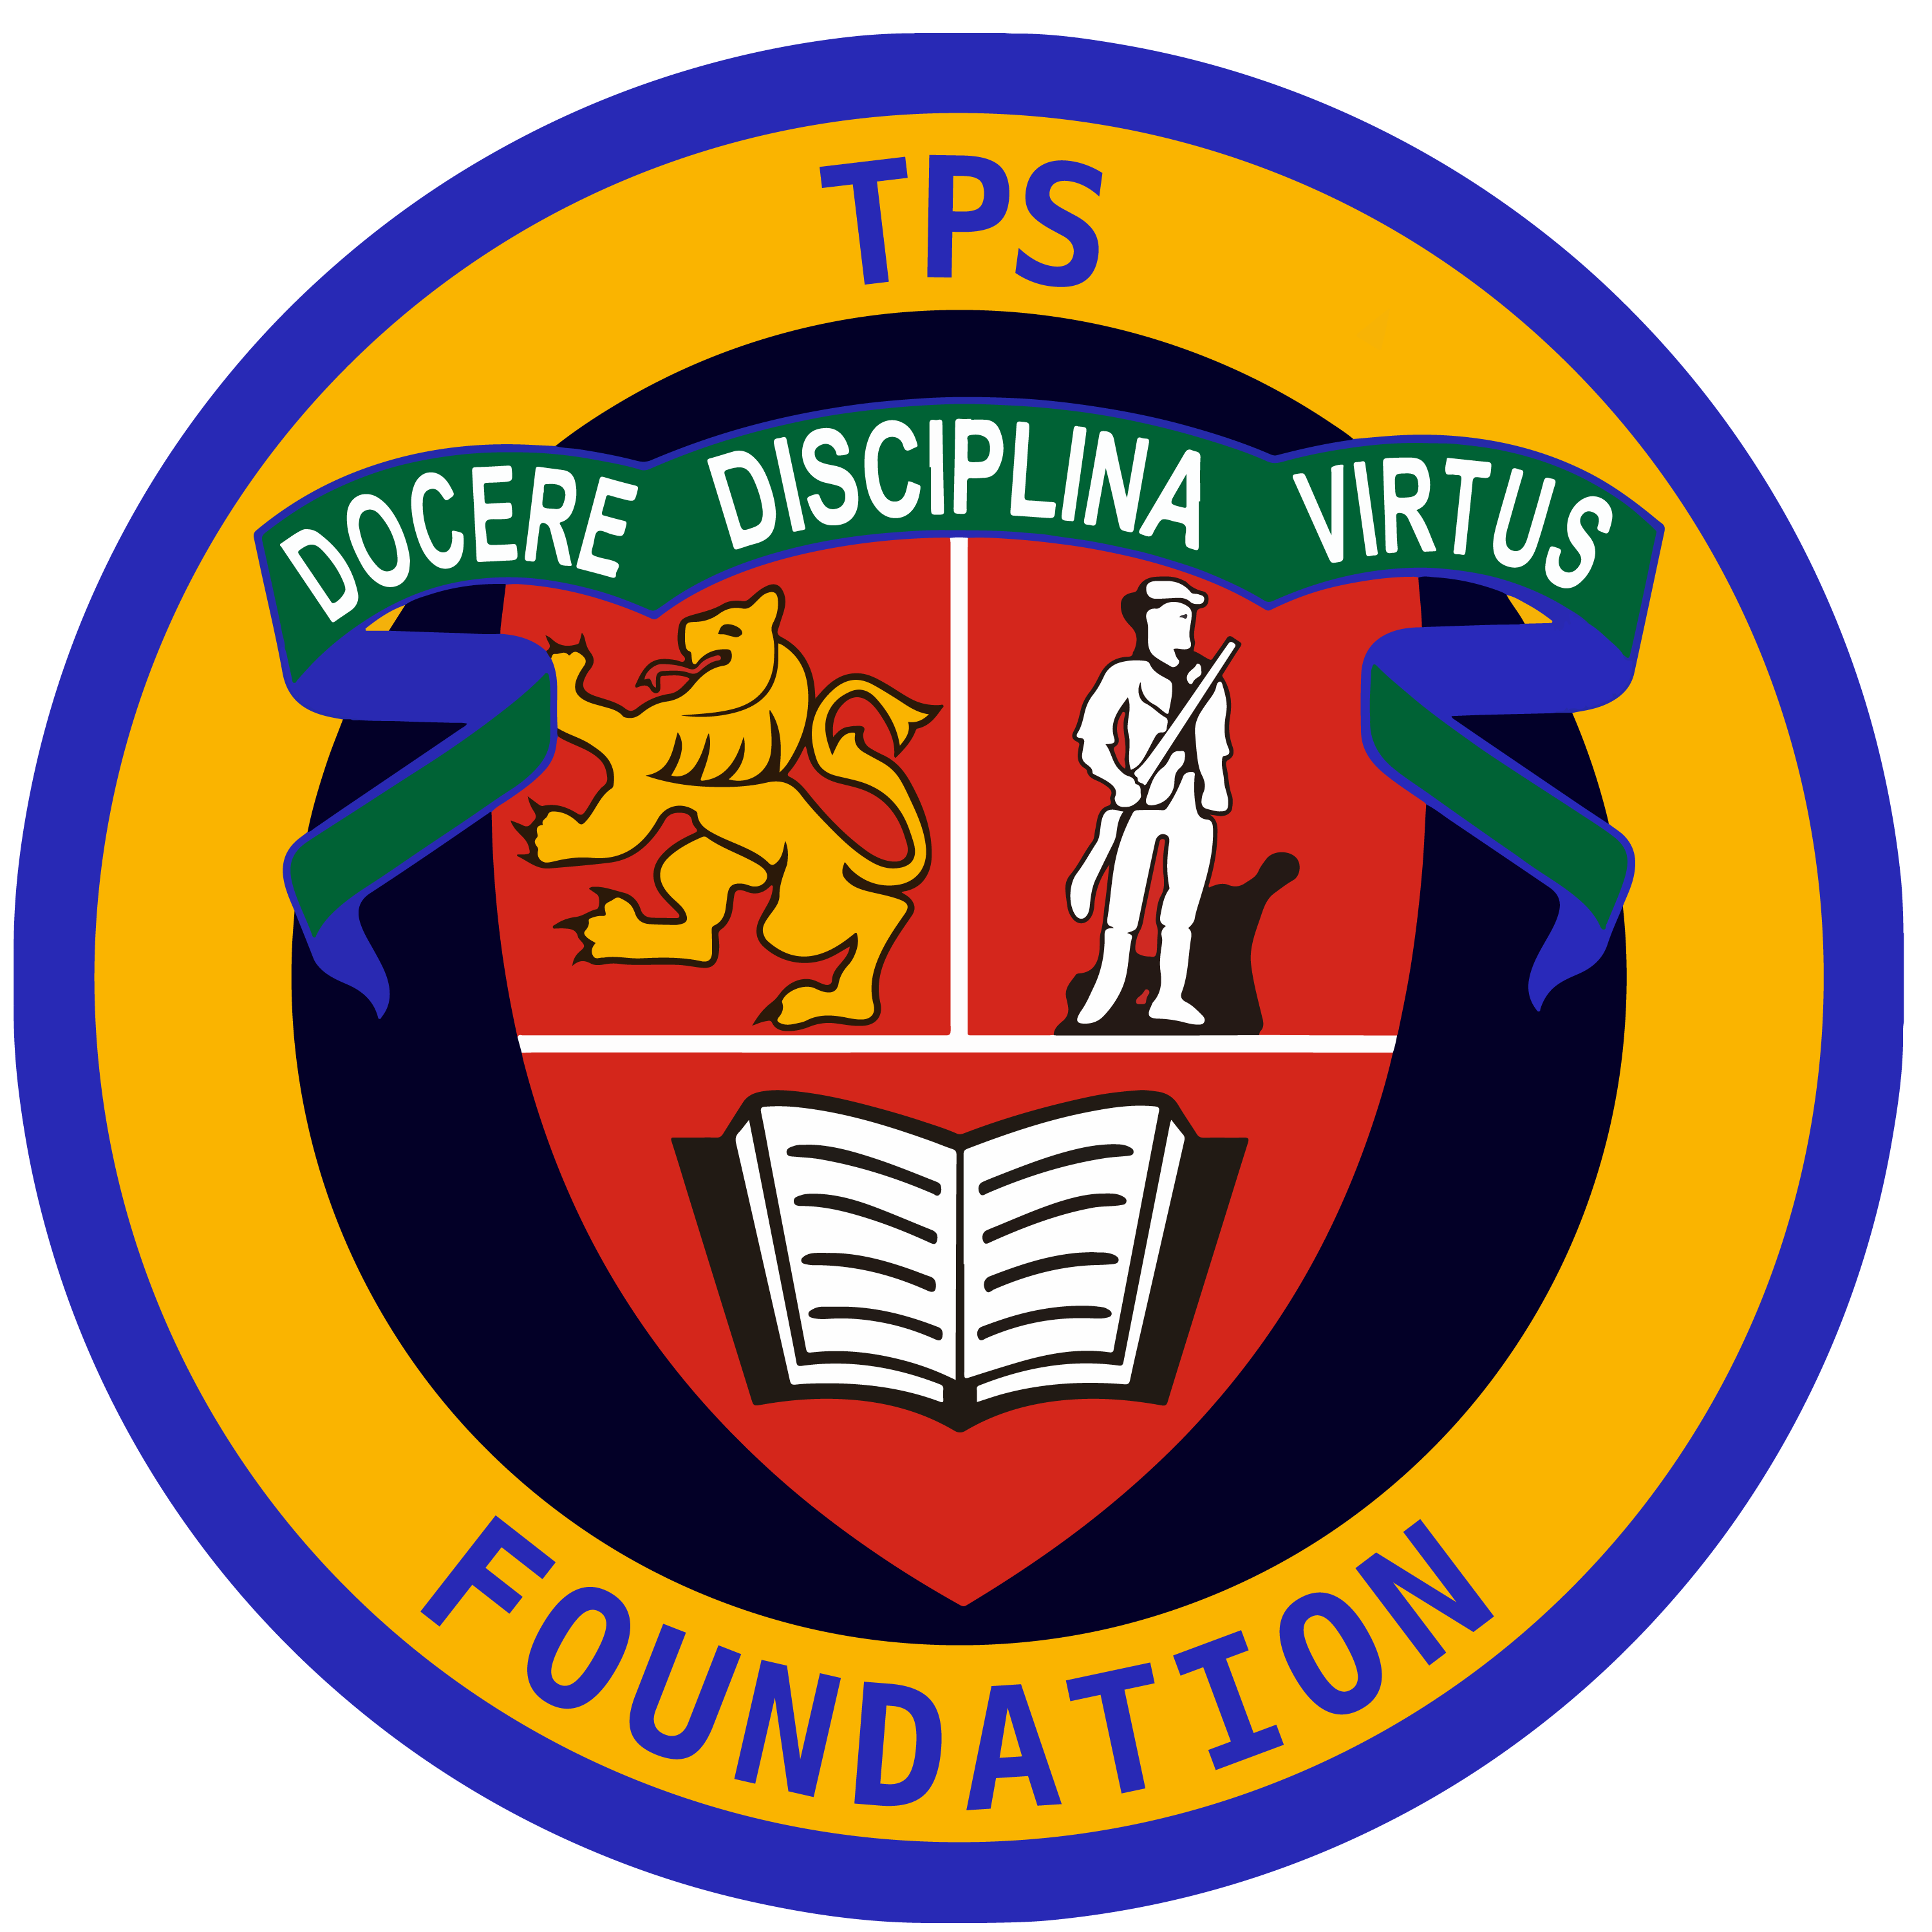 TPS Foundation